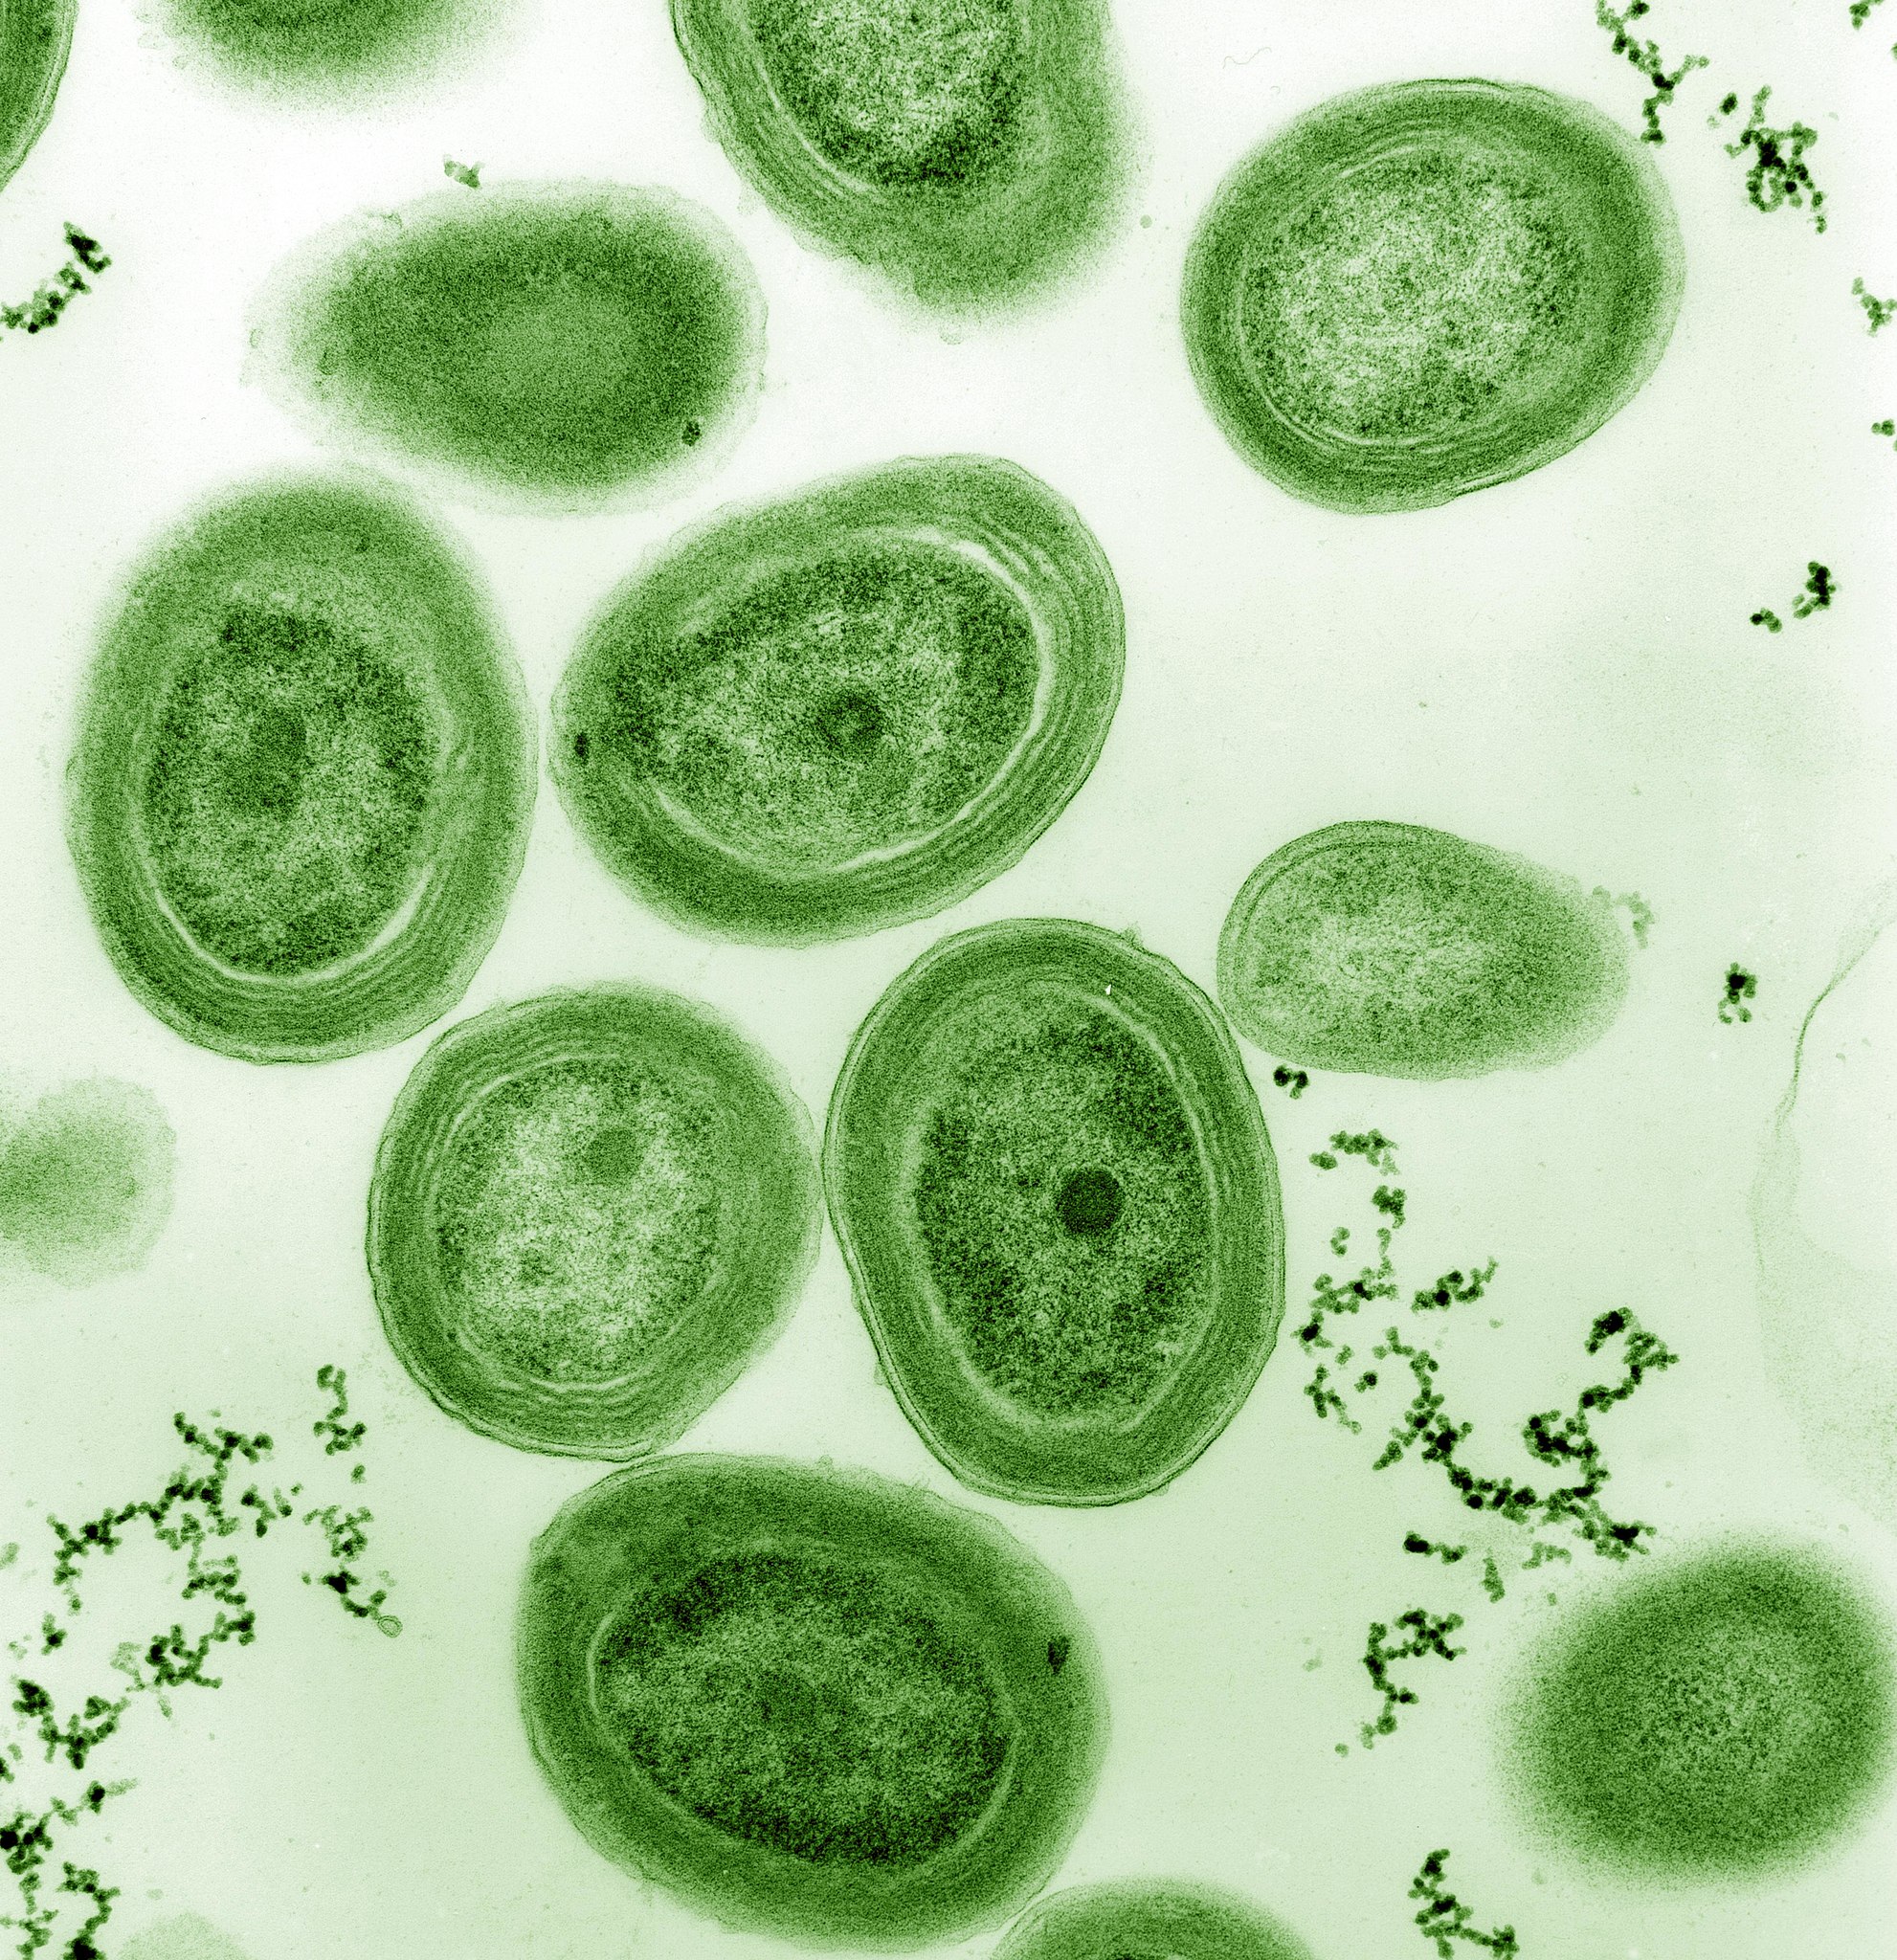 Cyanobakterien